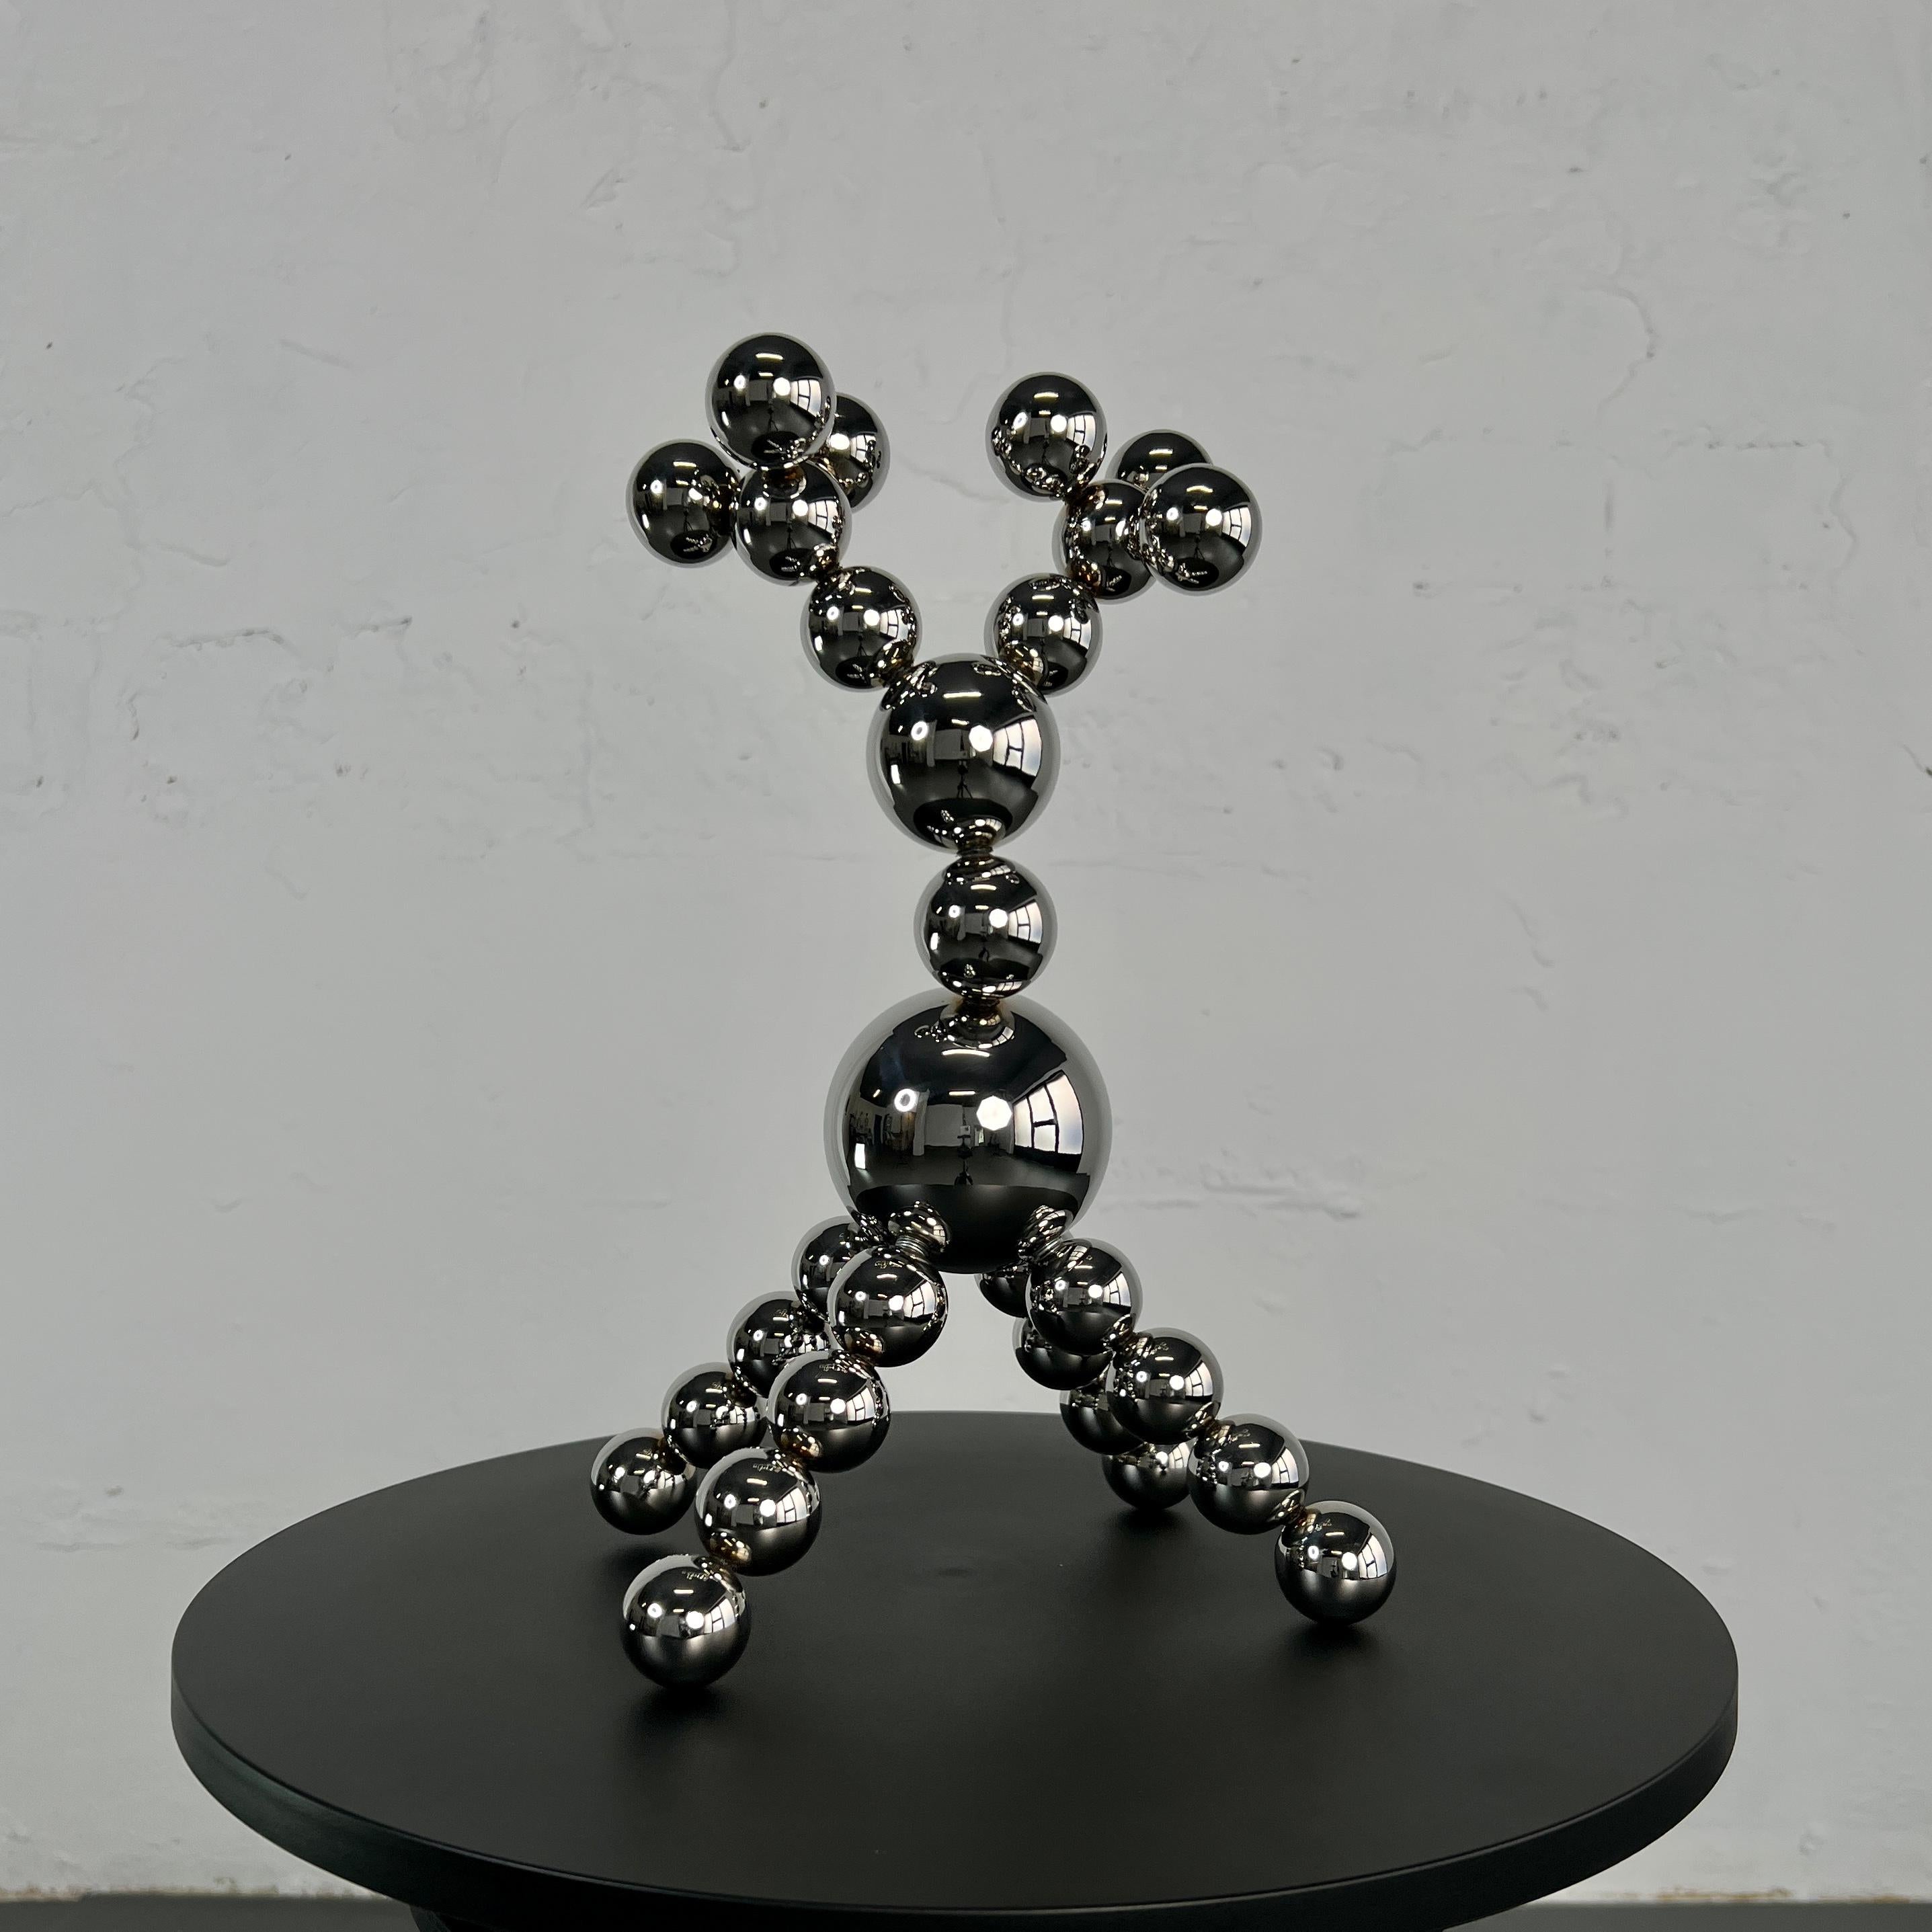 Hirsch Edelstahl Original-Skulptur Minimalistische Kunst.